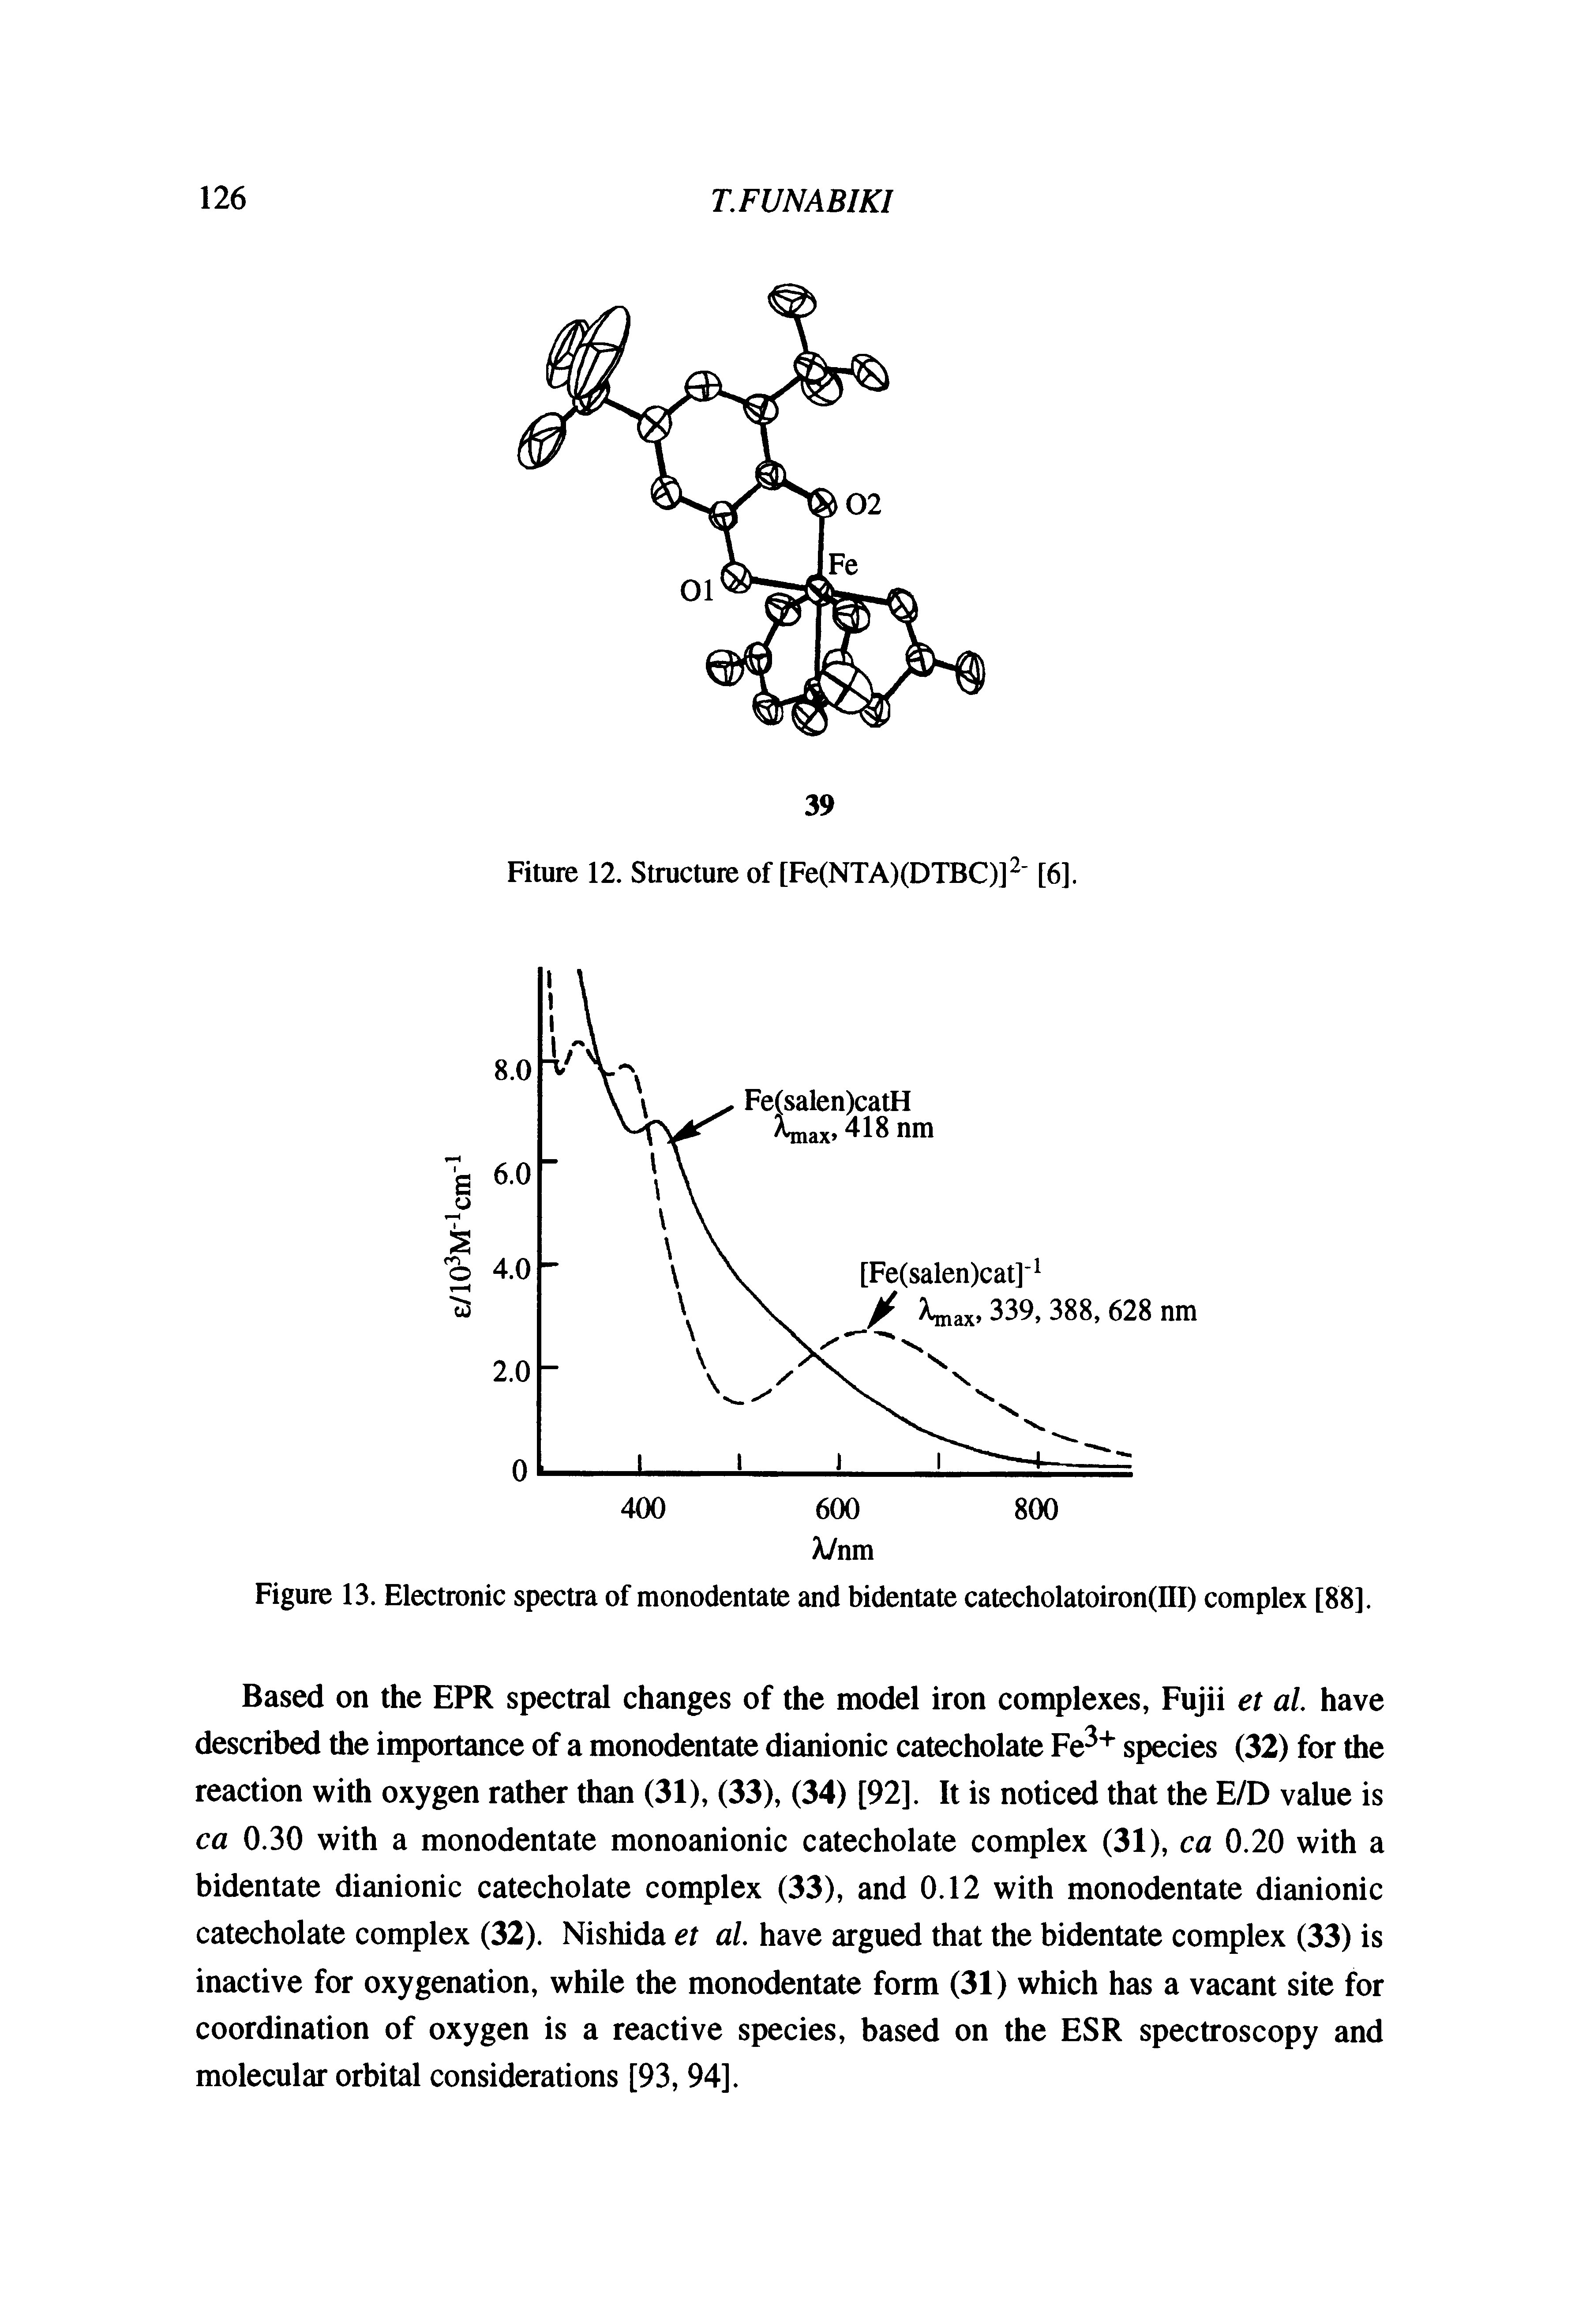 Figure 13. Electronic spectra of monodentate and bidentate catecholatoiron(III) complex [88].